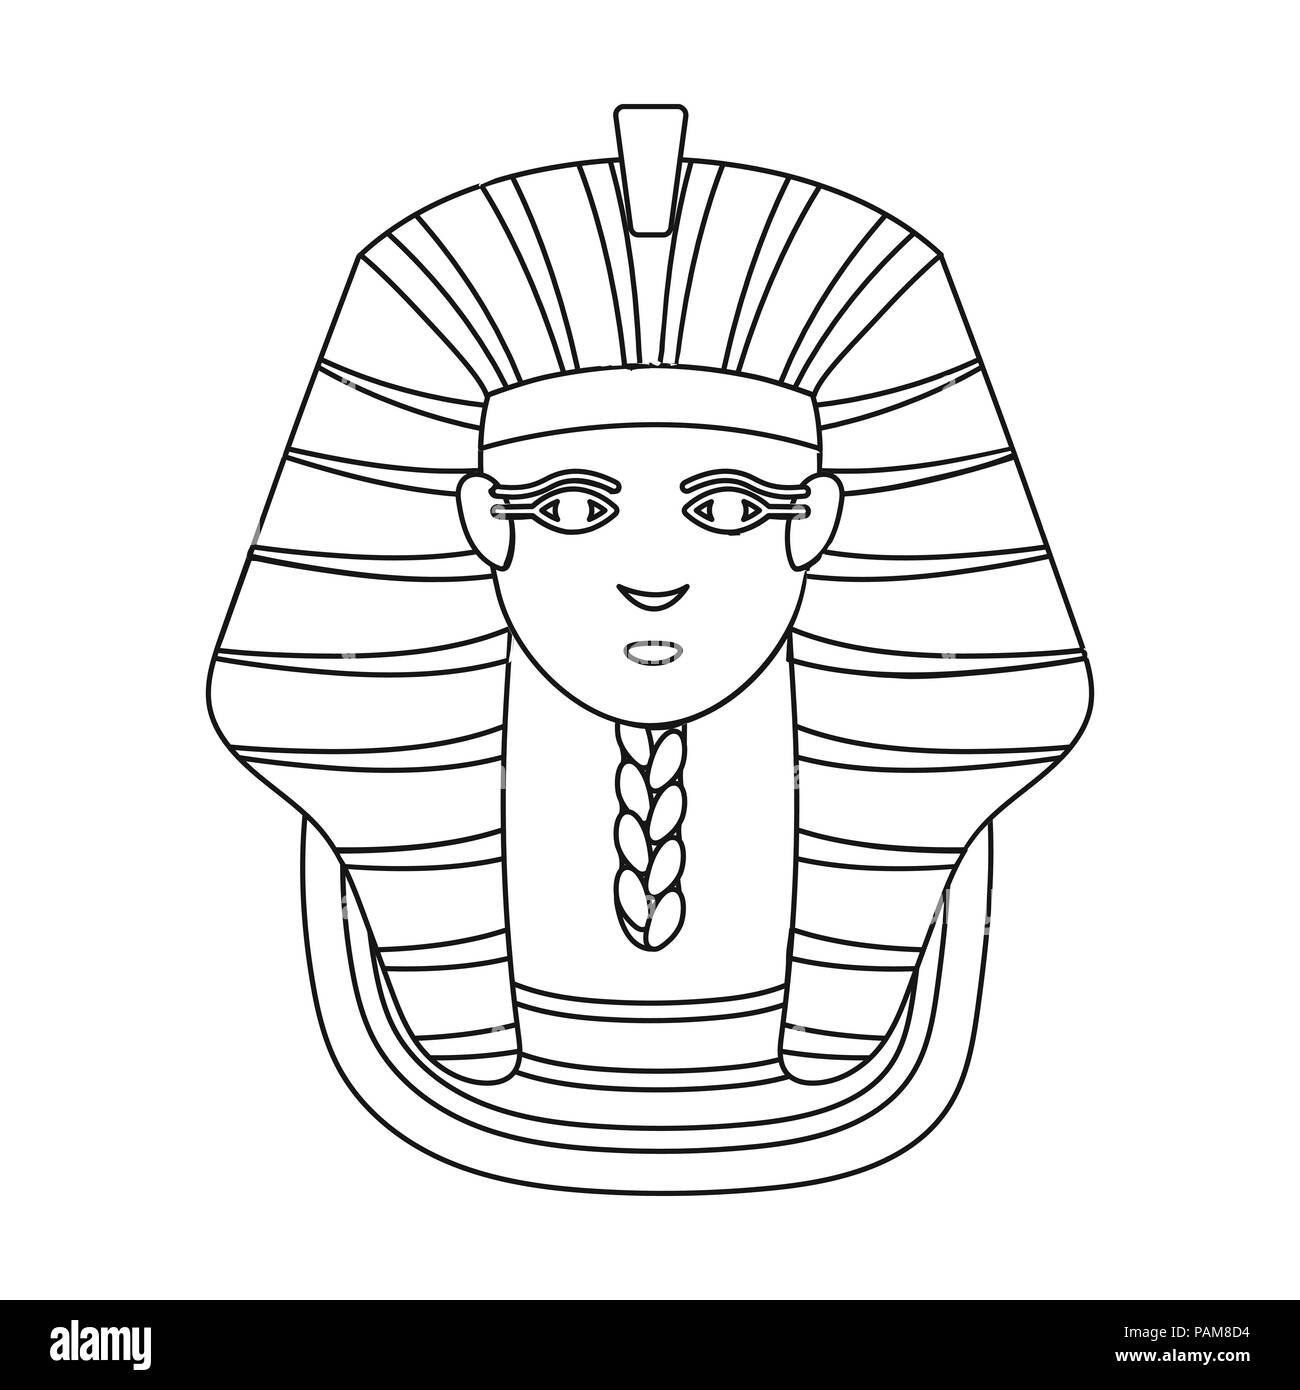 Mask of the pharaoh tutankhamen from class 5 #9